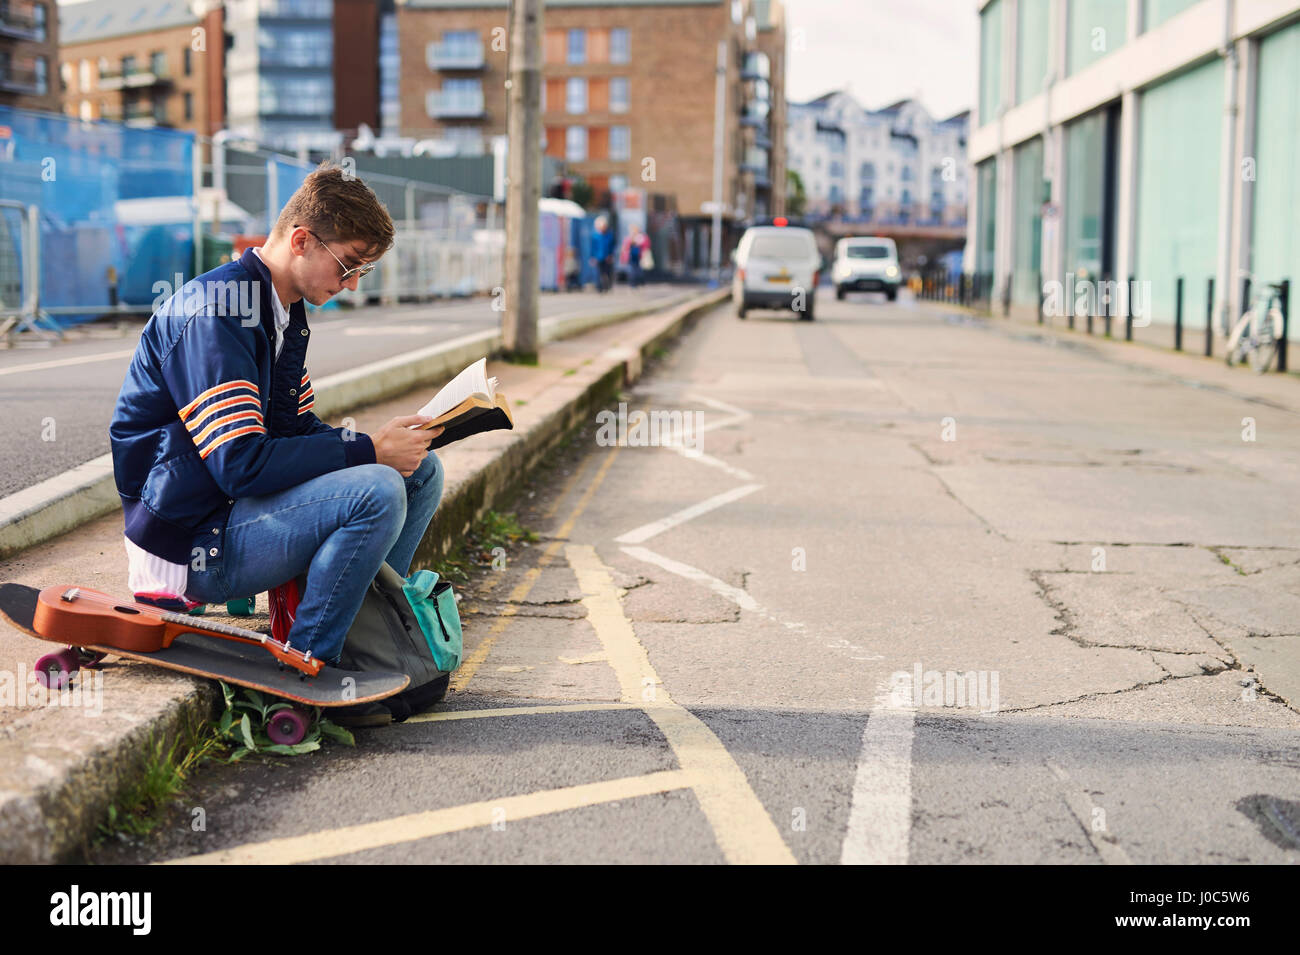 Young man sitting on kerb, reading book, skateboard beside him, Bristol, UK Stock Photo